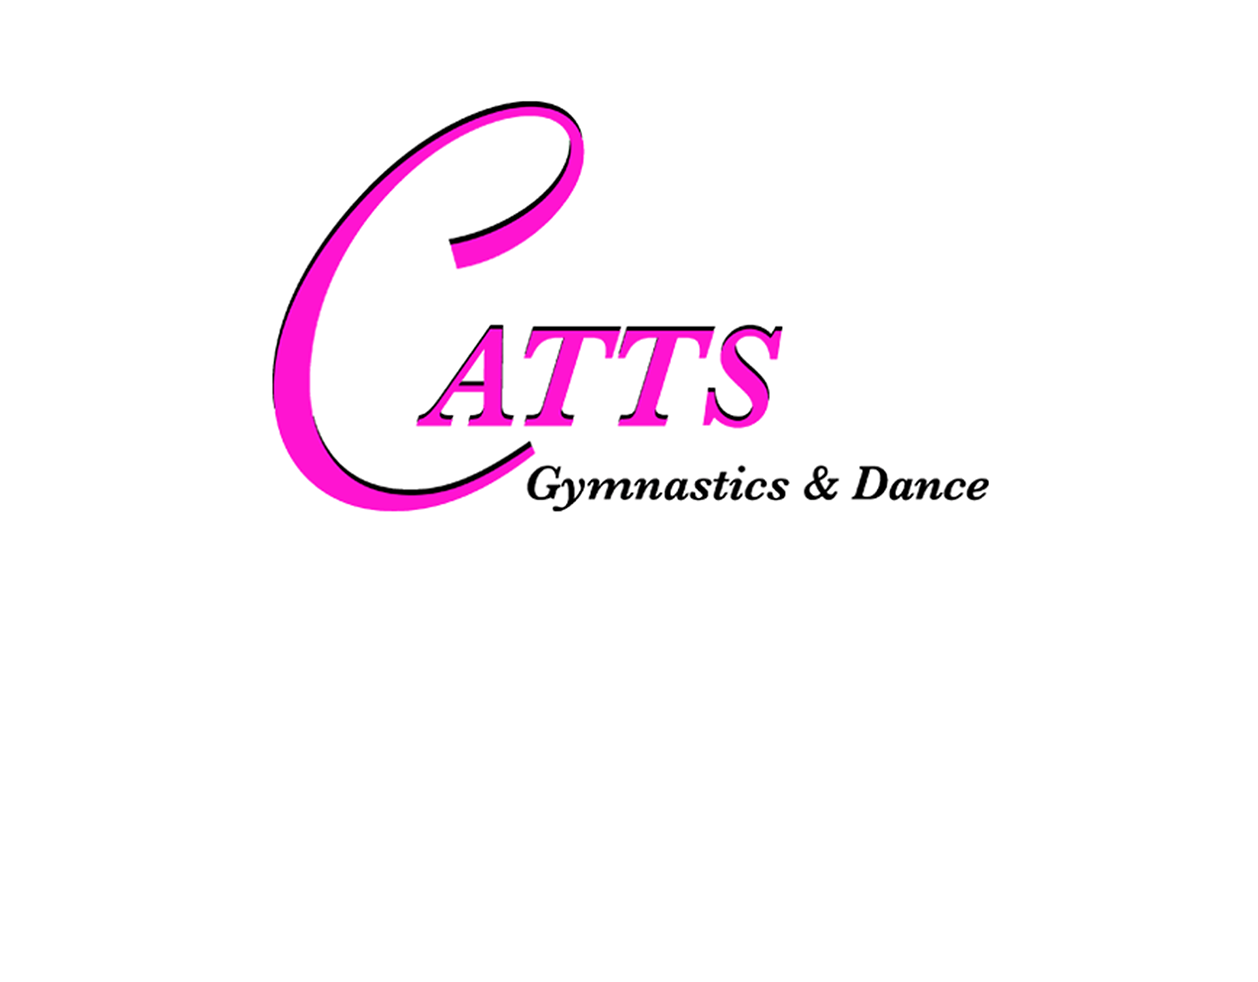 CATTS Gymnastics & Dance